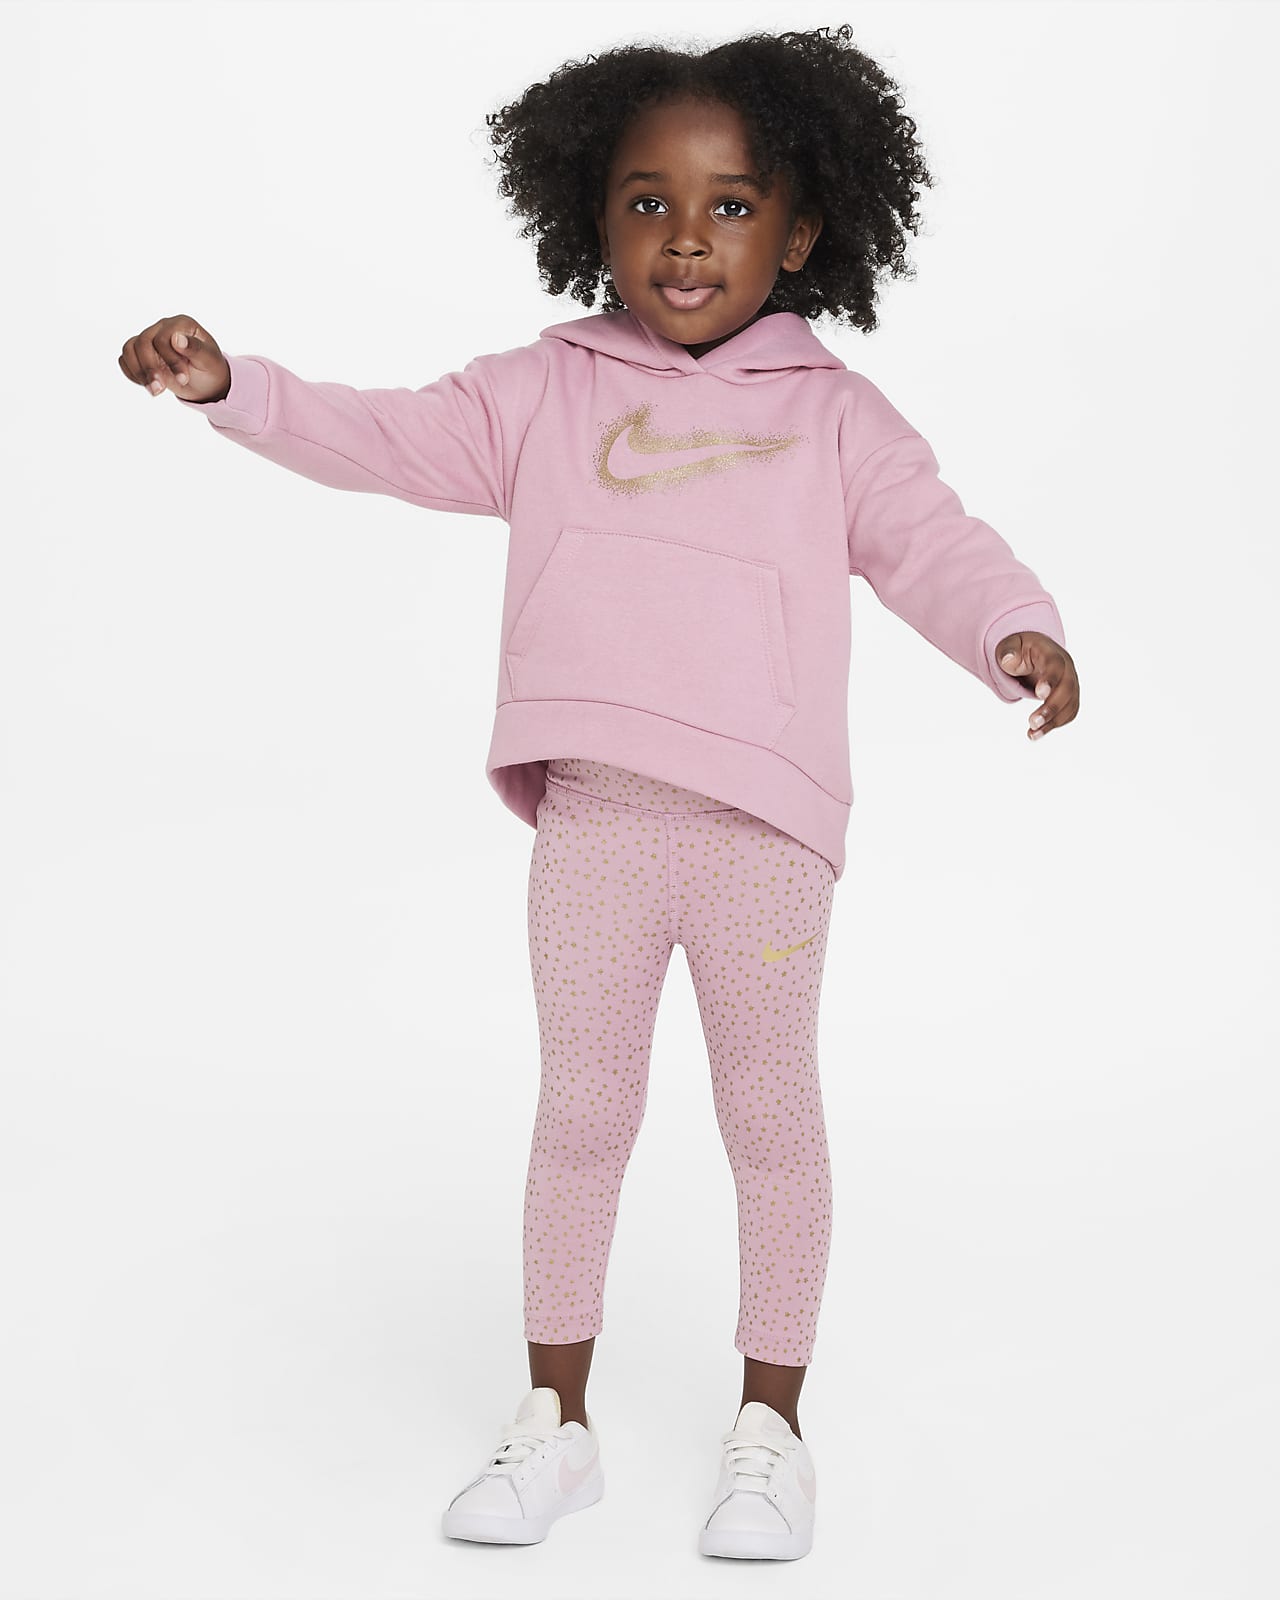 Purple Nike Little Girls 'Just Do It' Splatter Leggings - Get The